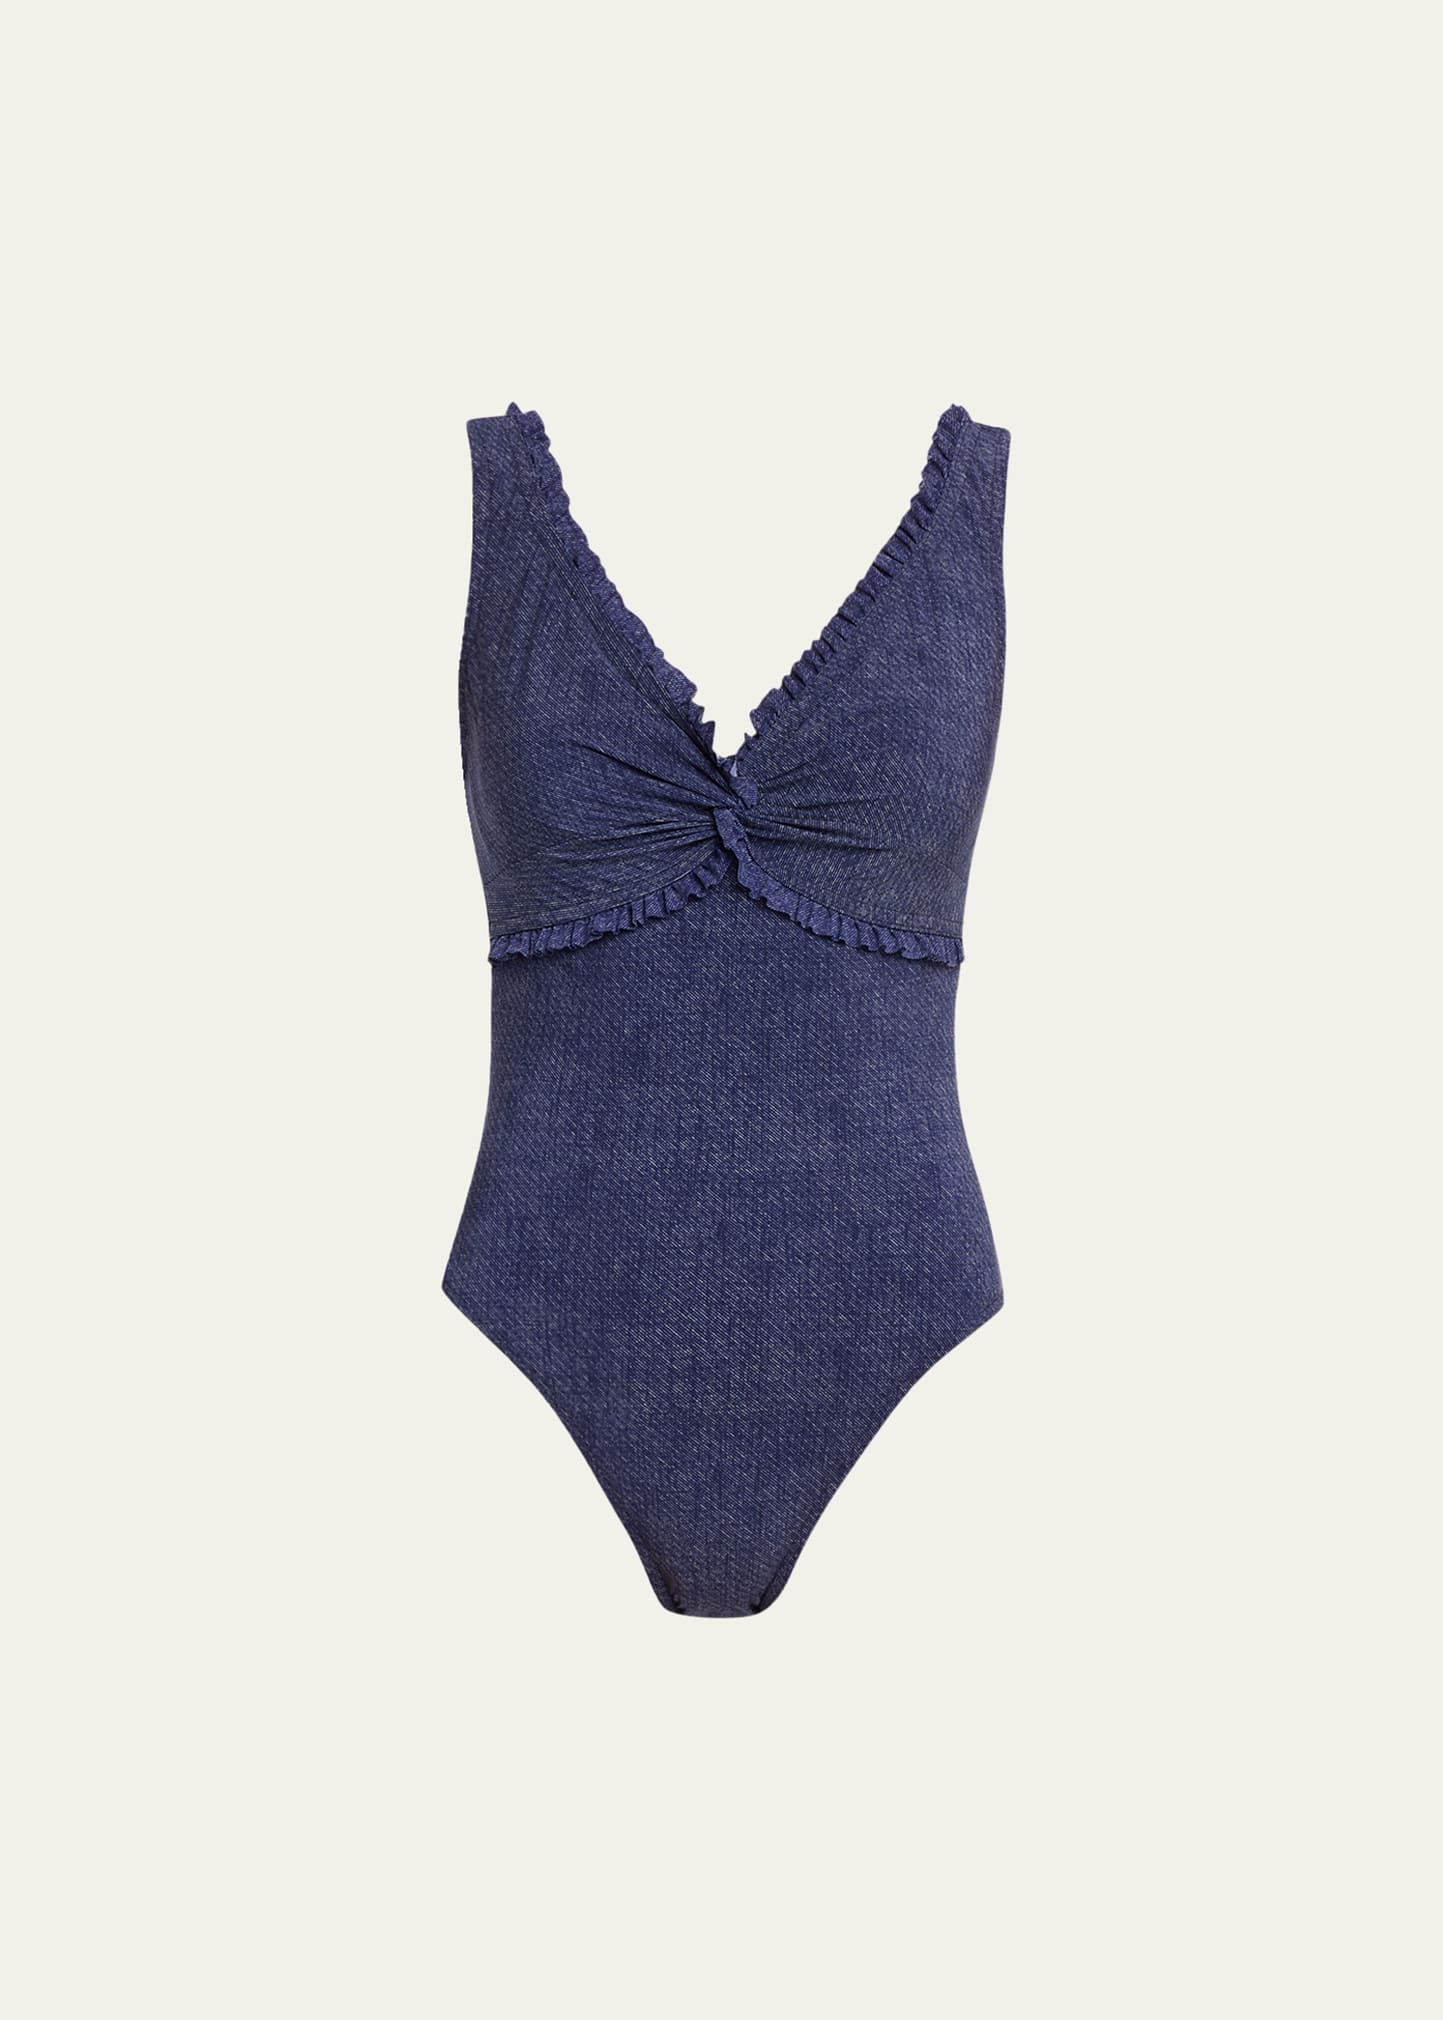 Karla Colletto Nori V-neck Silent Underwire One-piece Swimsuit In Denim